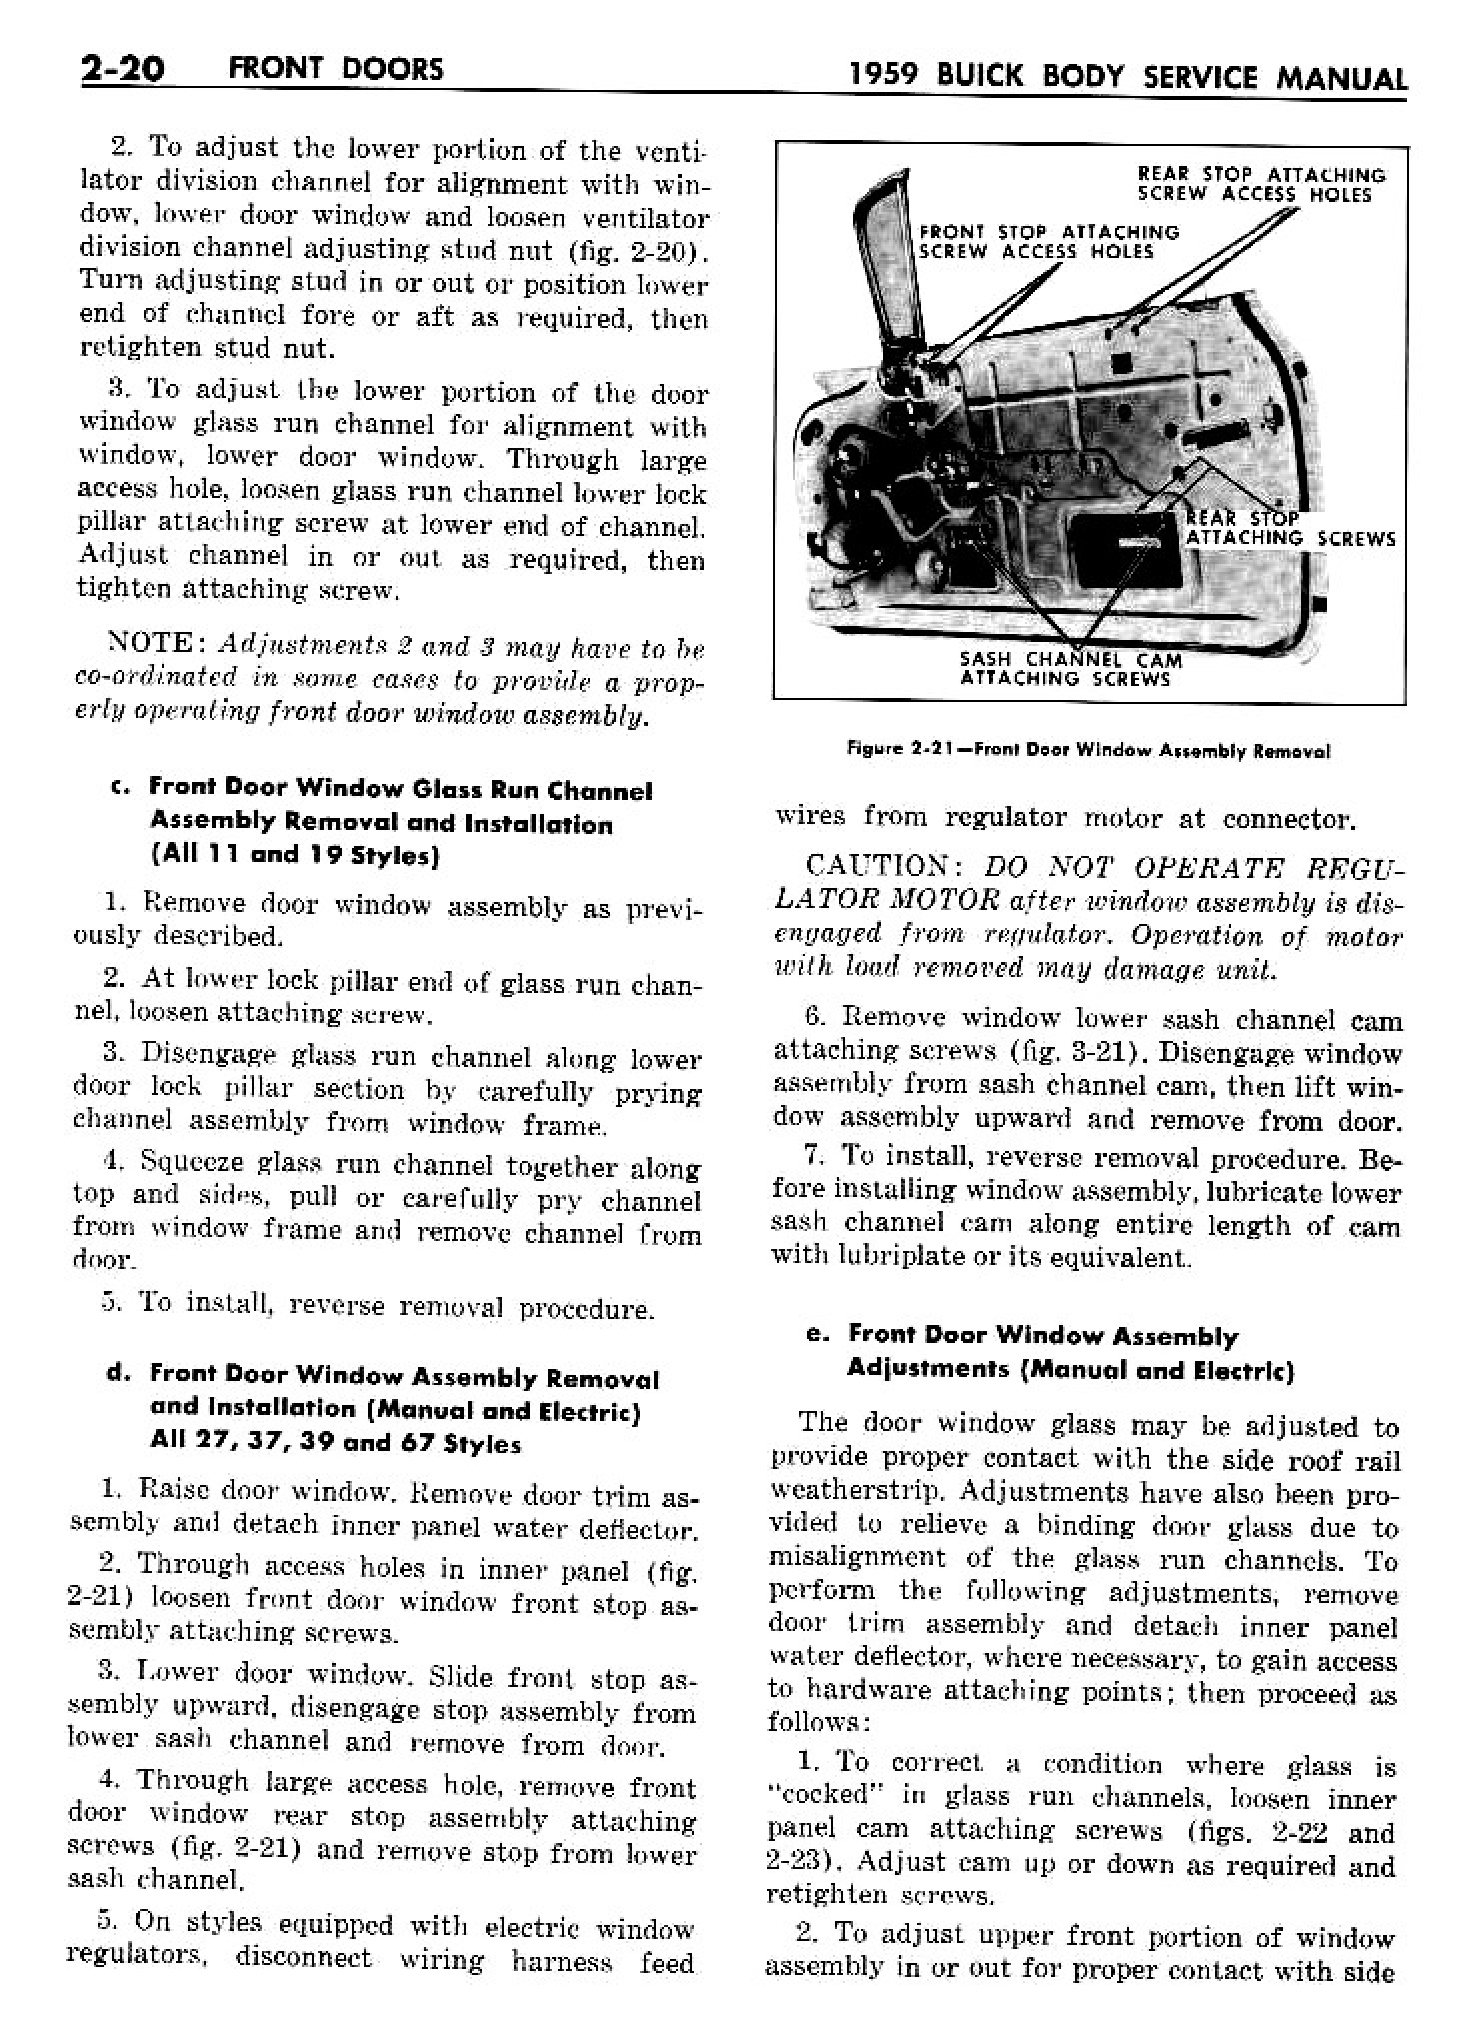 n_03 1959 Buick Body Service-Doors_20.jpg